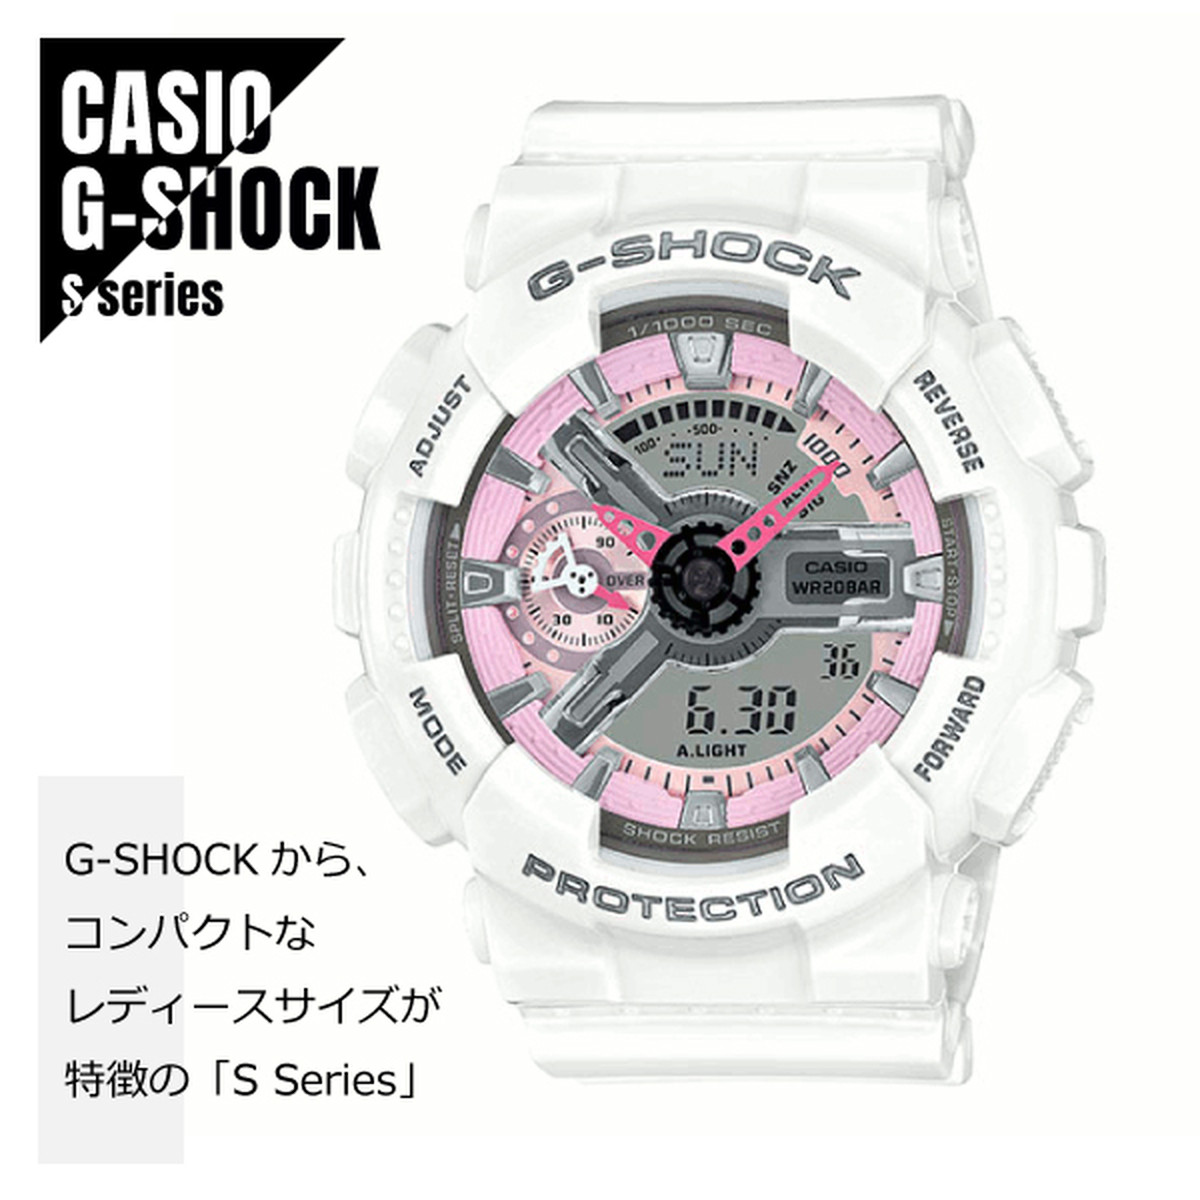 Casio カシオ G Shock Gショック S Series エスシリーズ Gma S110mp 7a ホワイト ピンク 腕時計 レディース 女性 誕生日プレゼント お祝い ギフト Watch Index